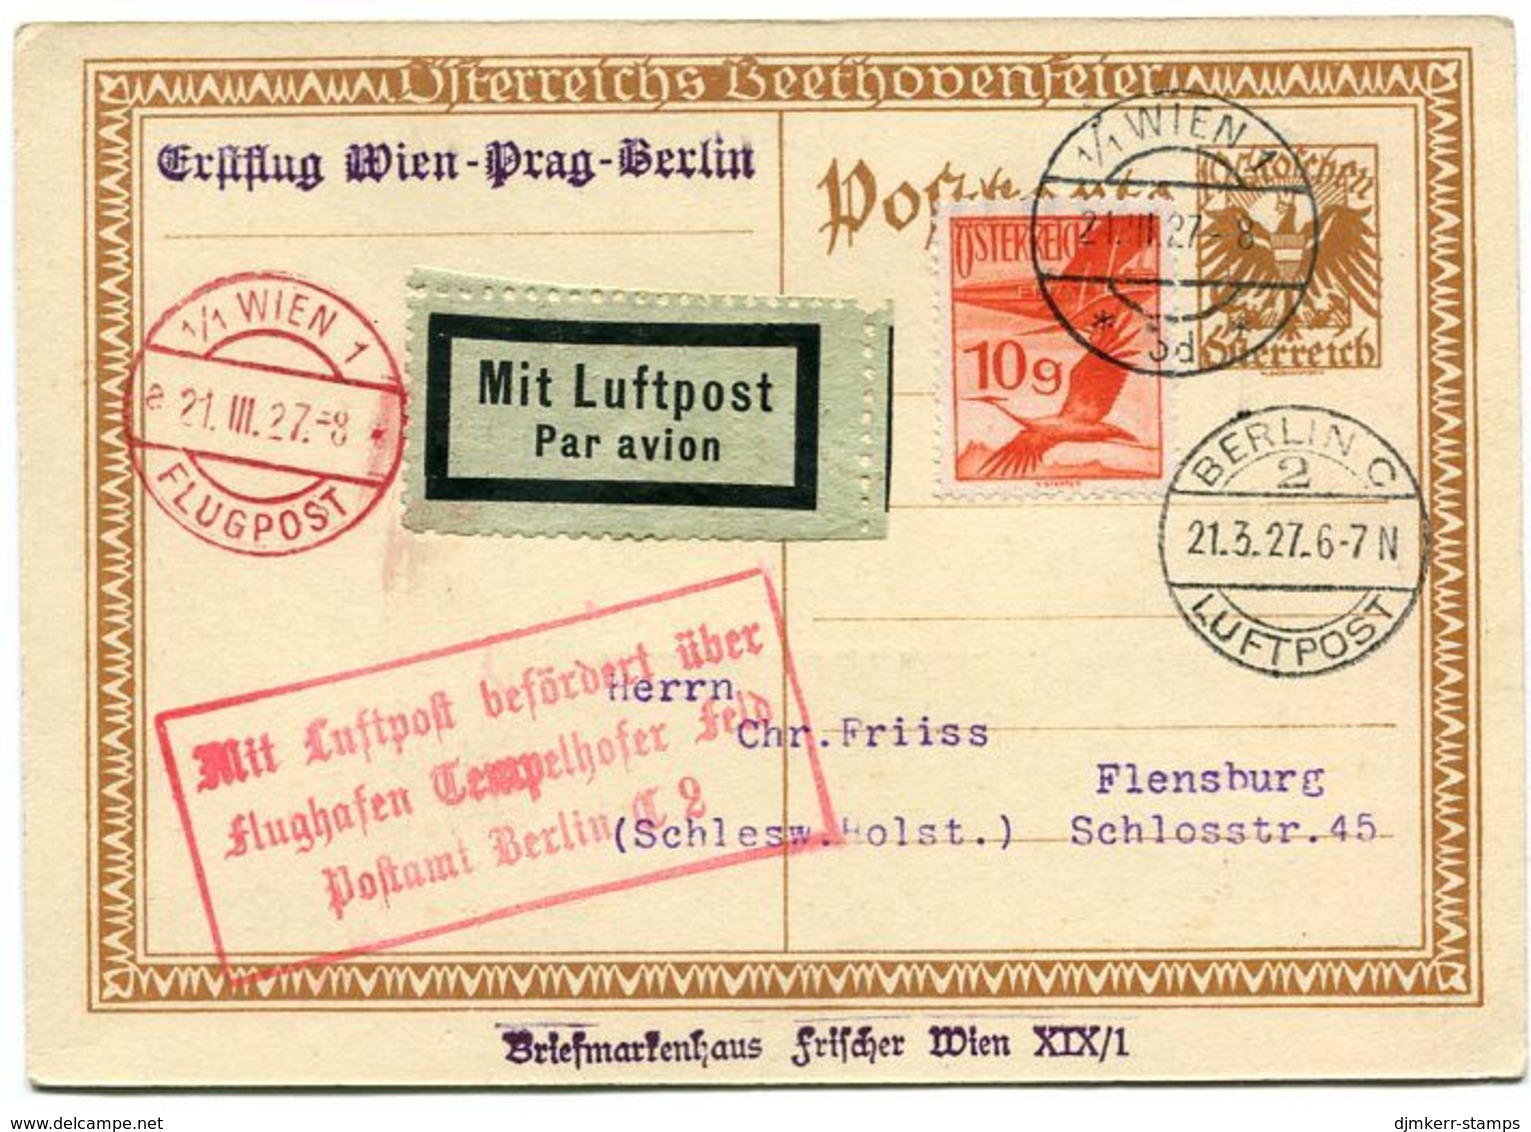 AUSTRIA 1927 First Flight Wien-Prague-Berlin On Postcard.  Beethoven Commemoration On Obverse. - Briefe U. Dokumente